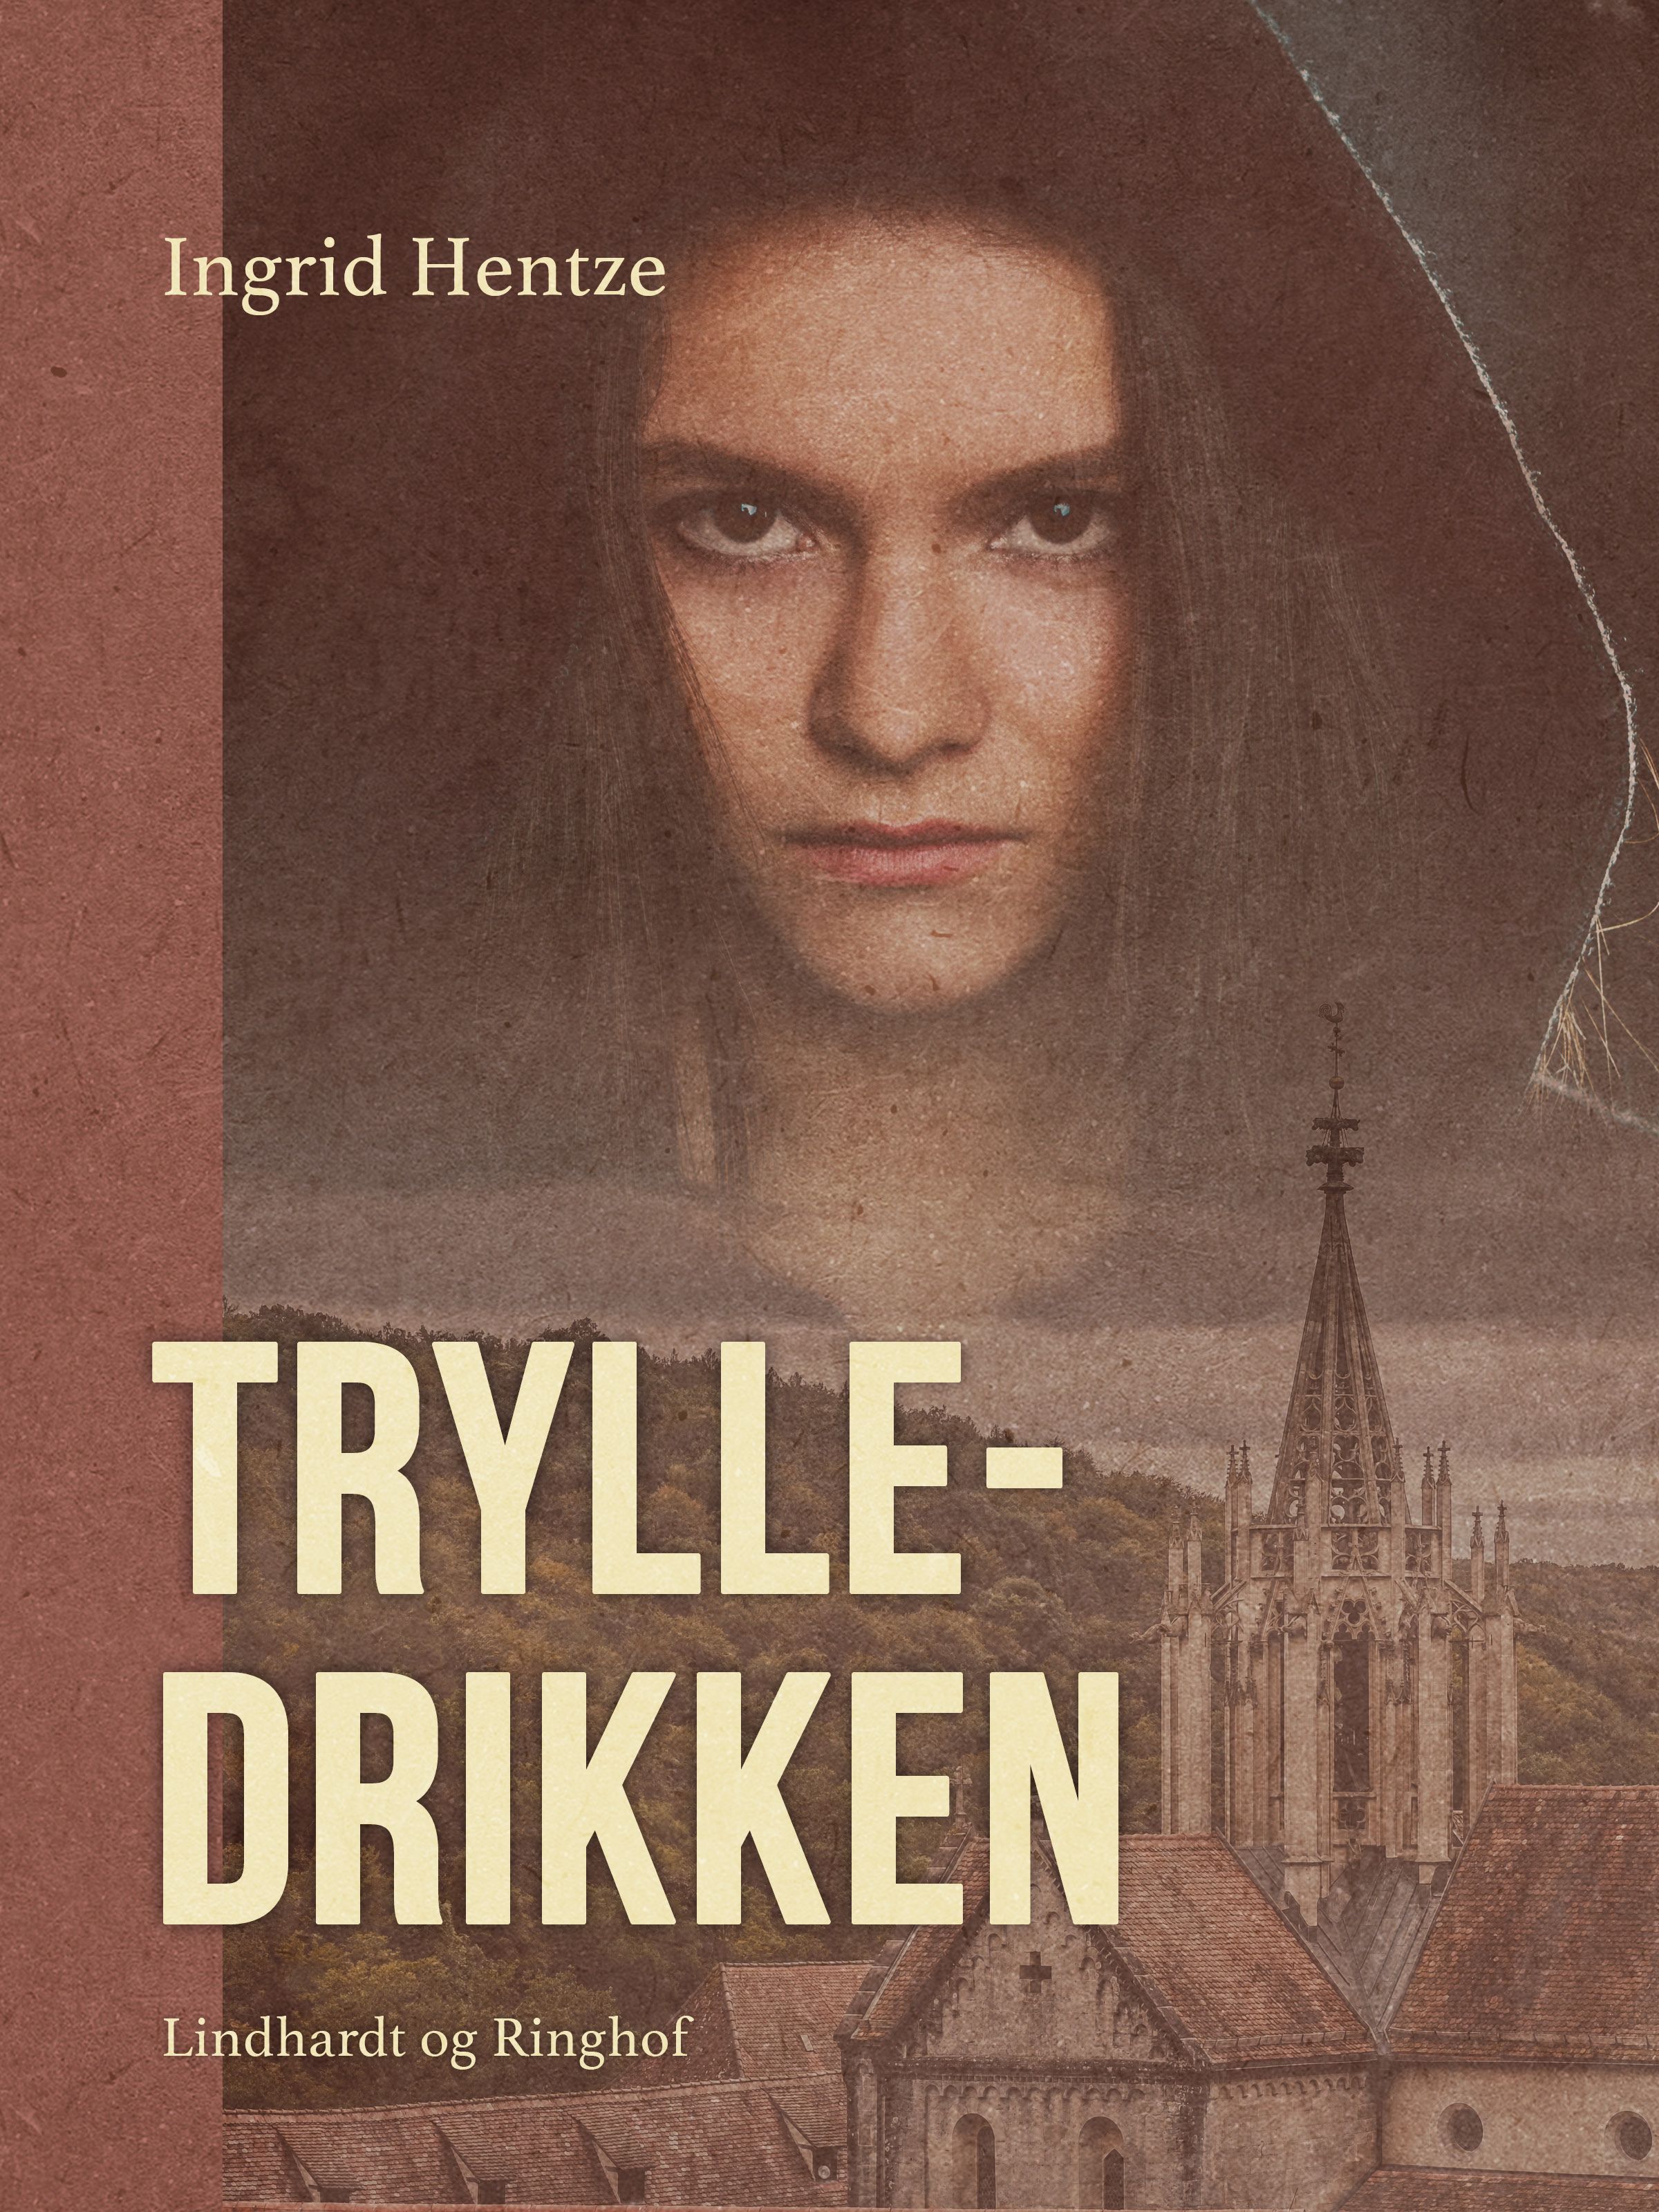 Trylledrikken, eBook by Ingrid Hentze